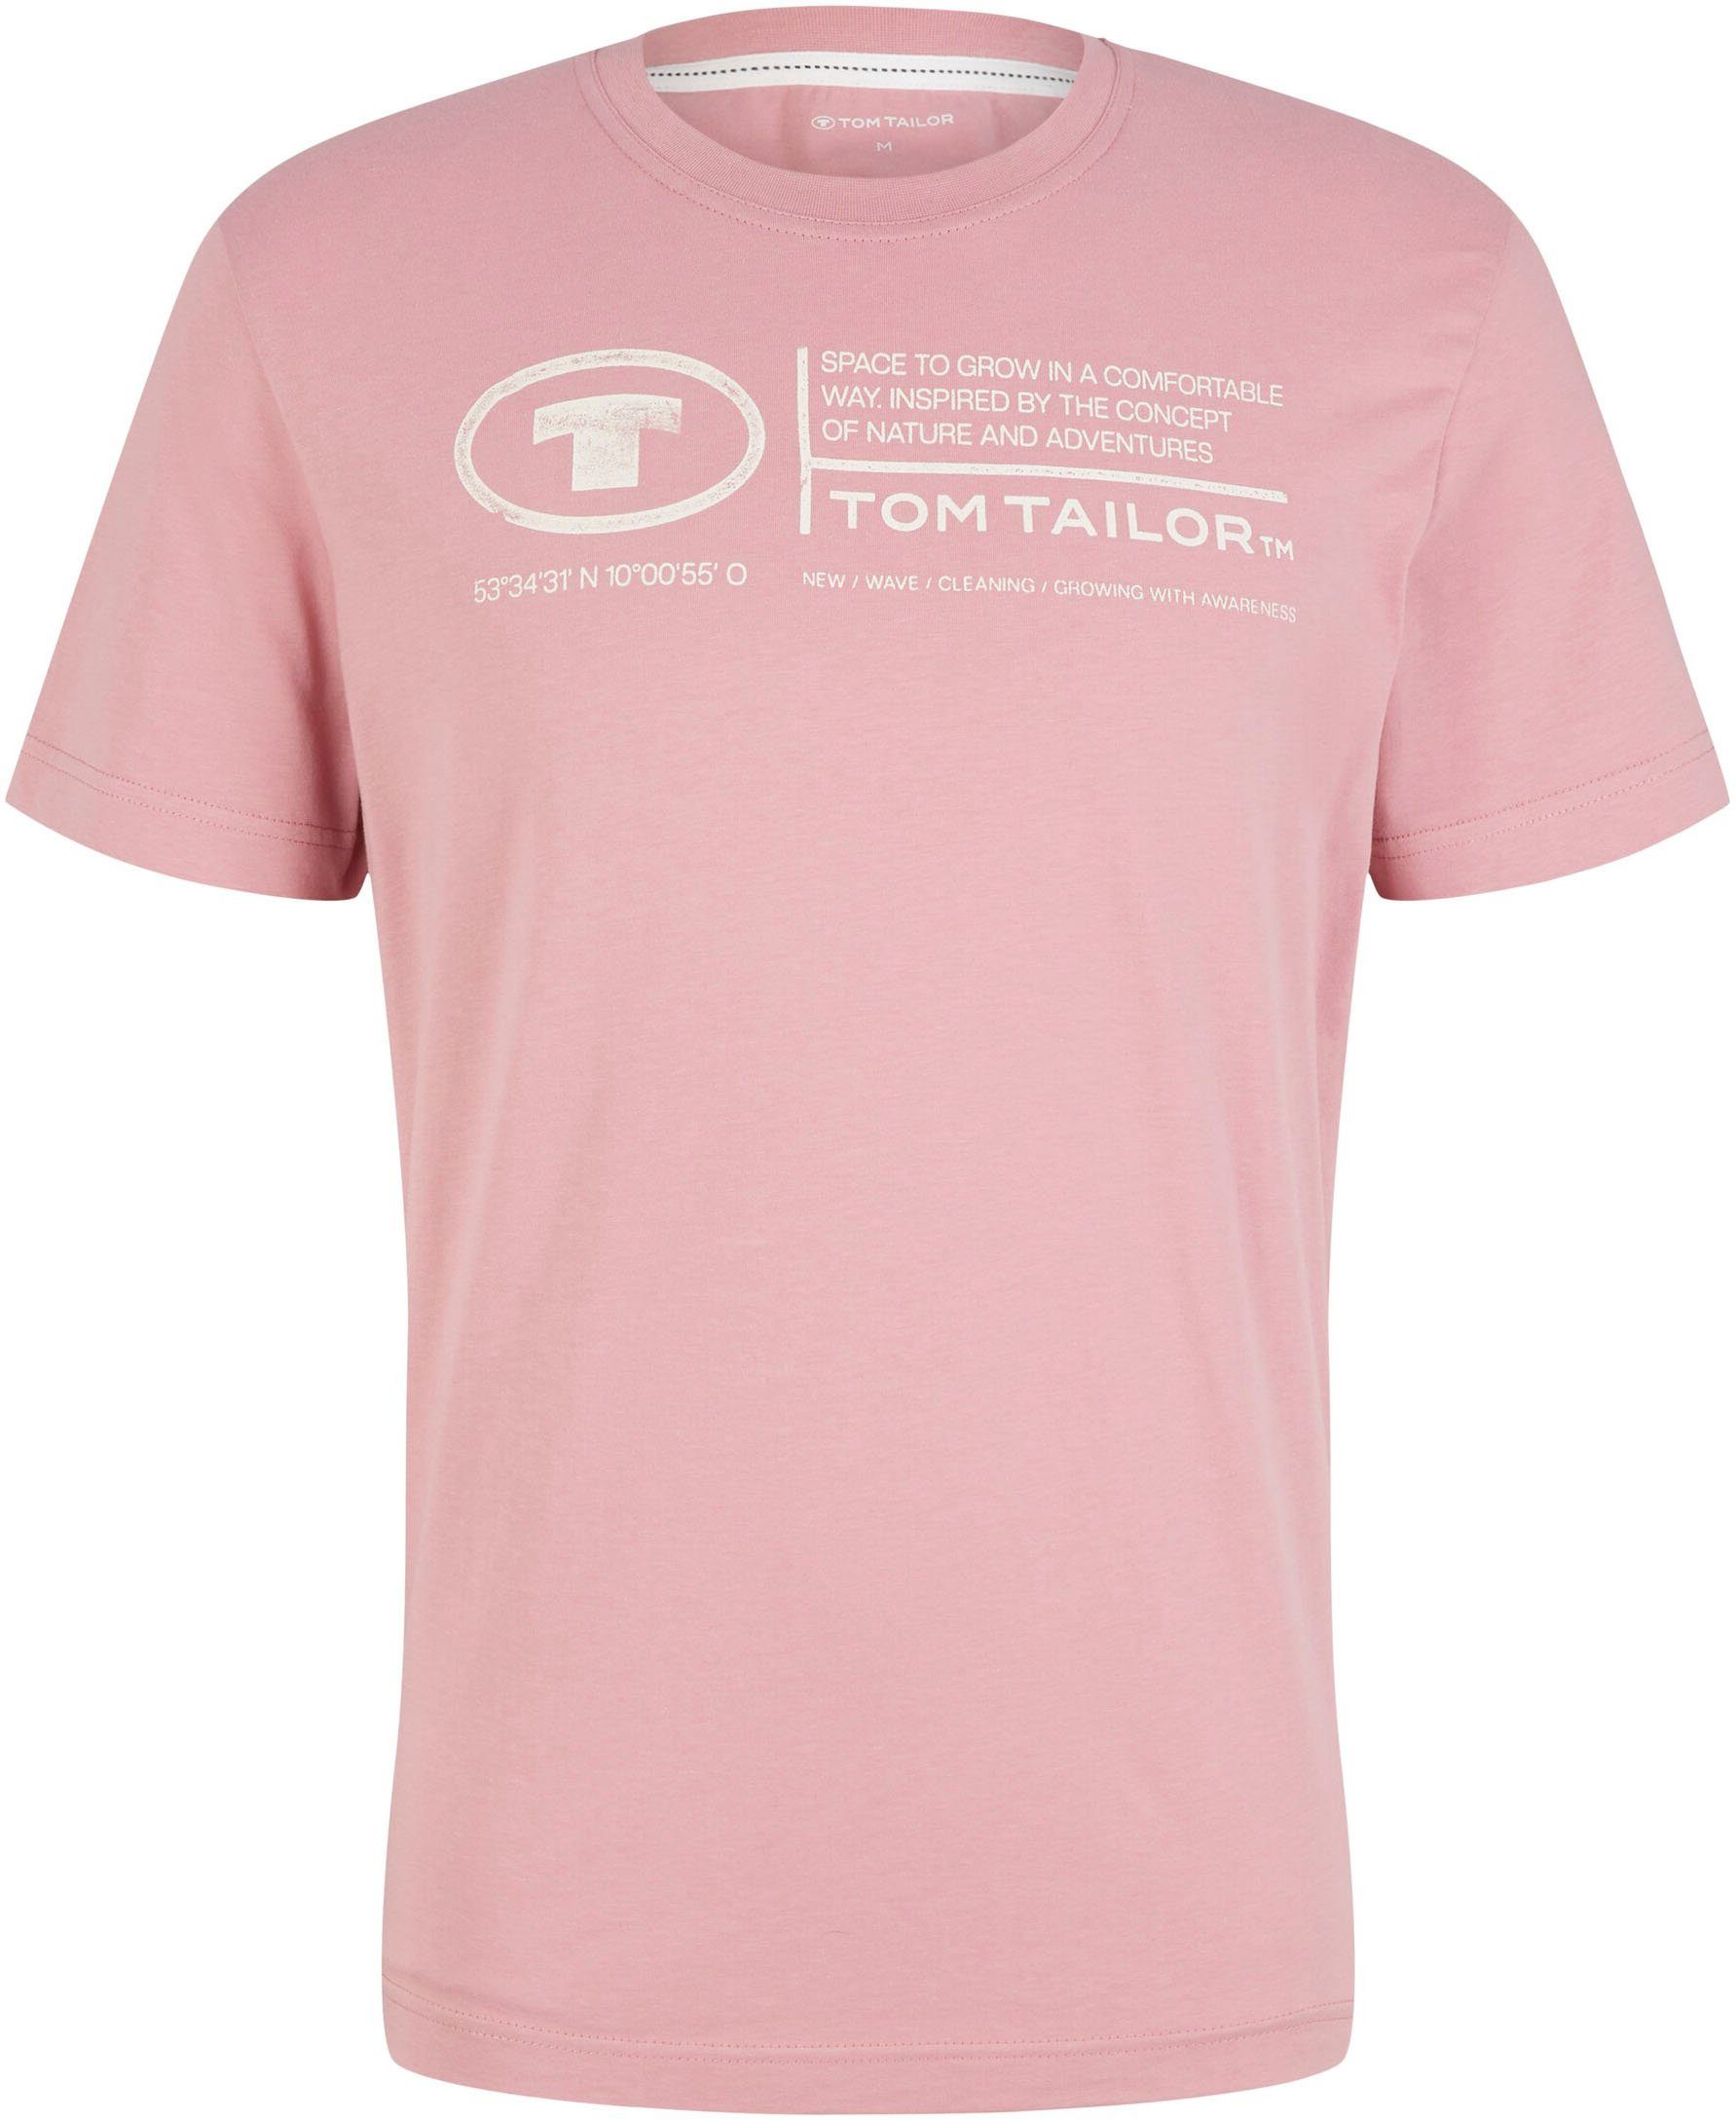 TOM TAILOR T-Shirt altrosa Frontprint Tom Tailor Herren Print-Shirt